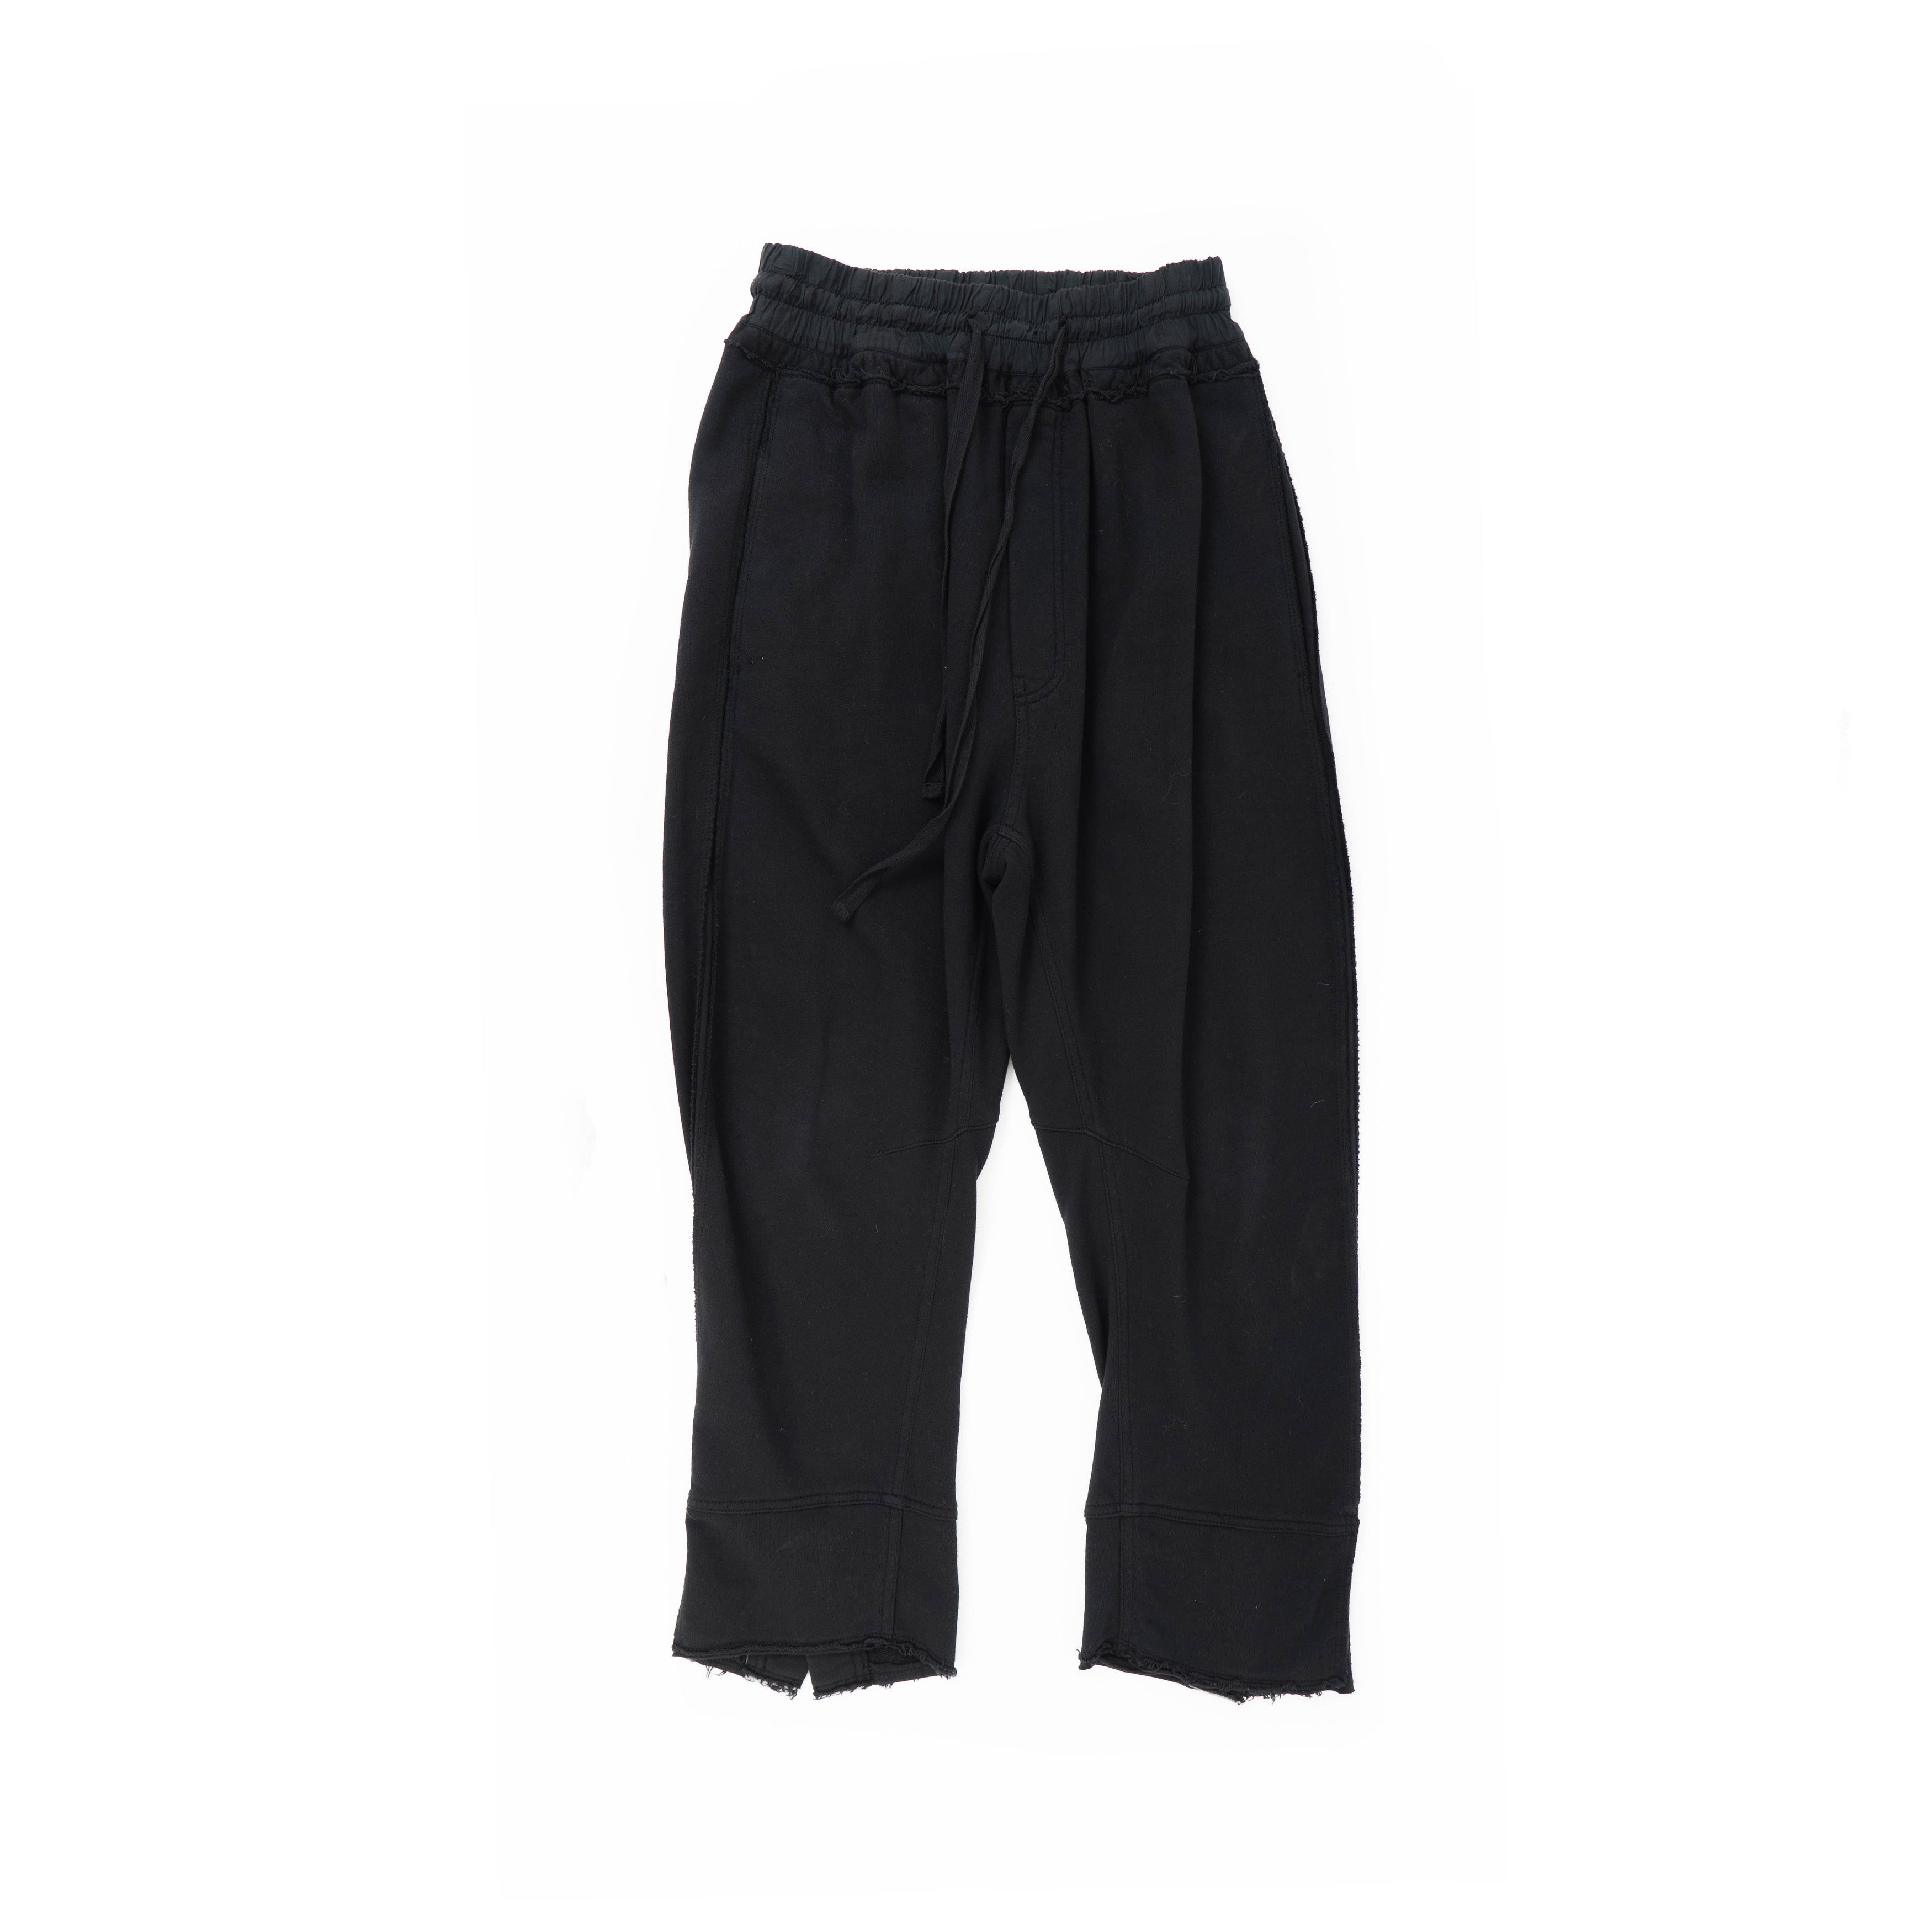 SS18 Distressed Black Sweatpants 1 of 1 Sample